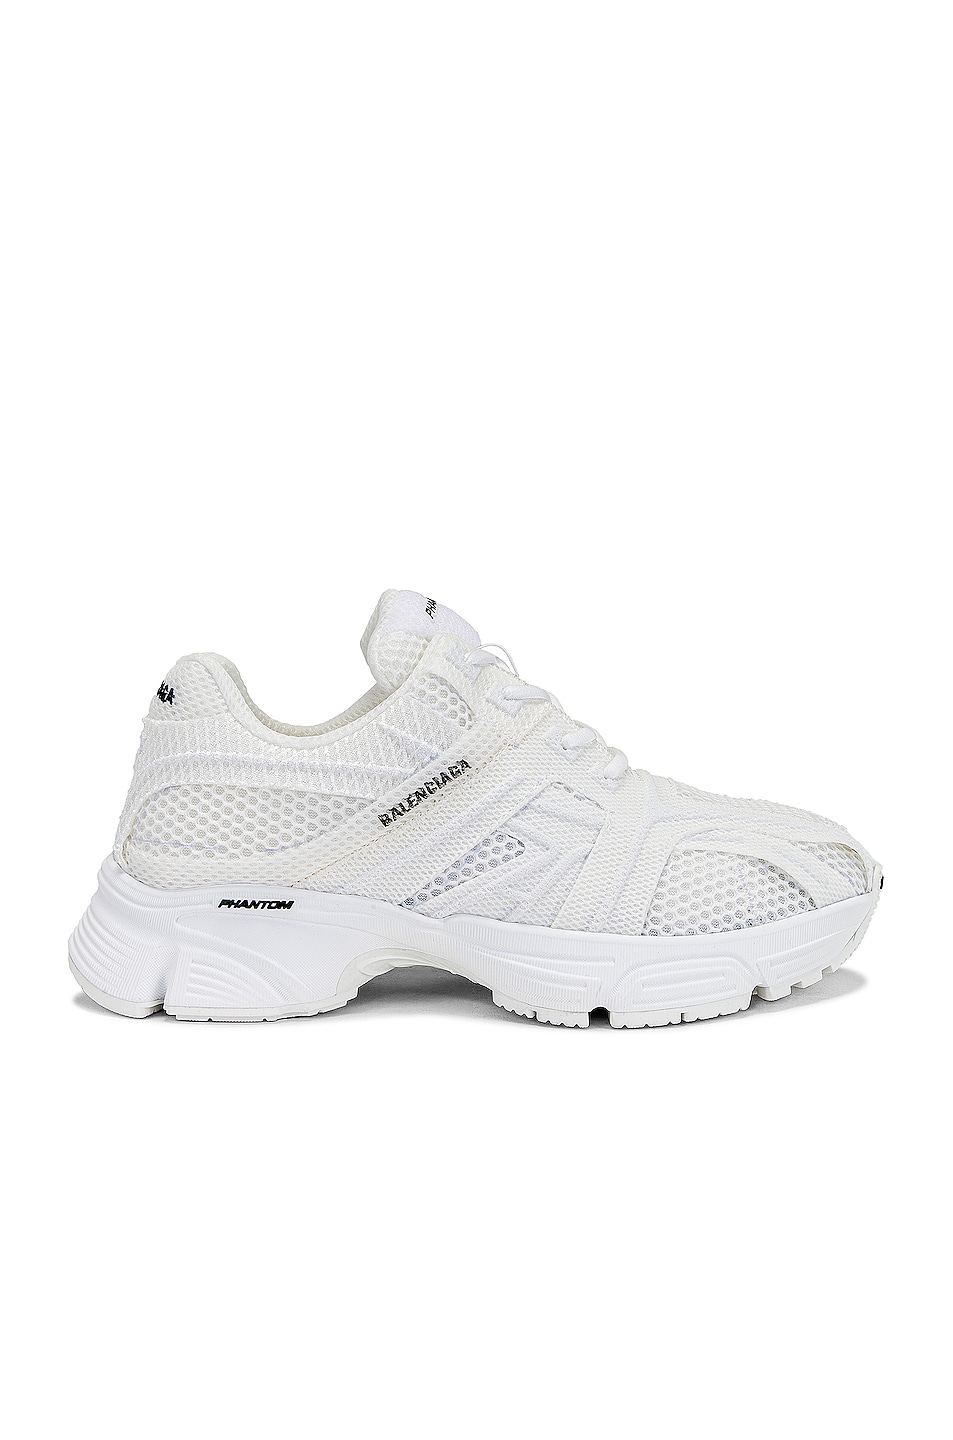 Balenciaga Phantom Sneakers in White | FWRD